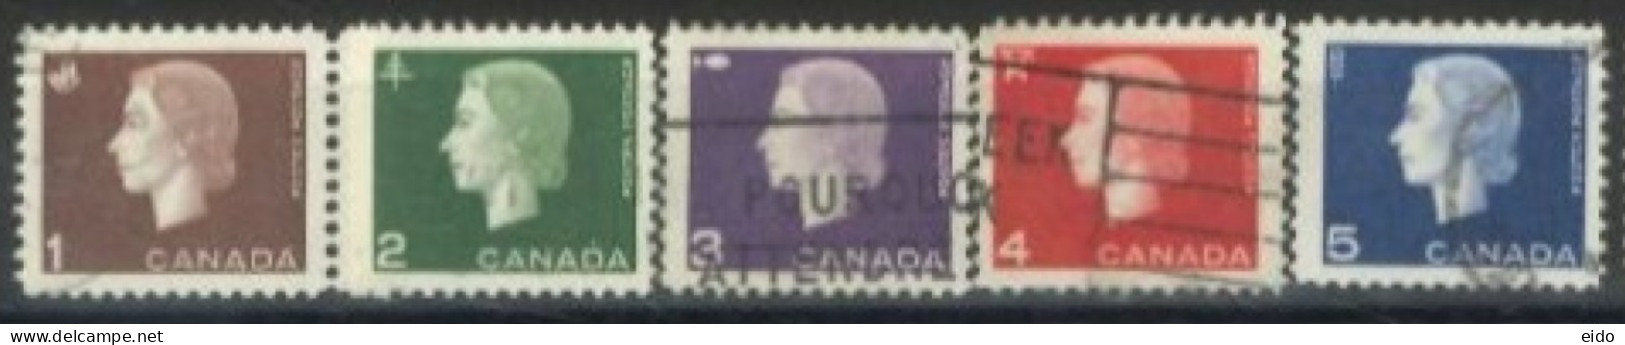 CANADA - 1962, QUEEN ELIZABETH II STAMPS & DIFFERENT SYMBOLS COMPLETE SET OF 5, USED. - Gebraucht